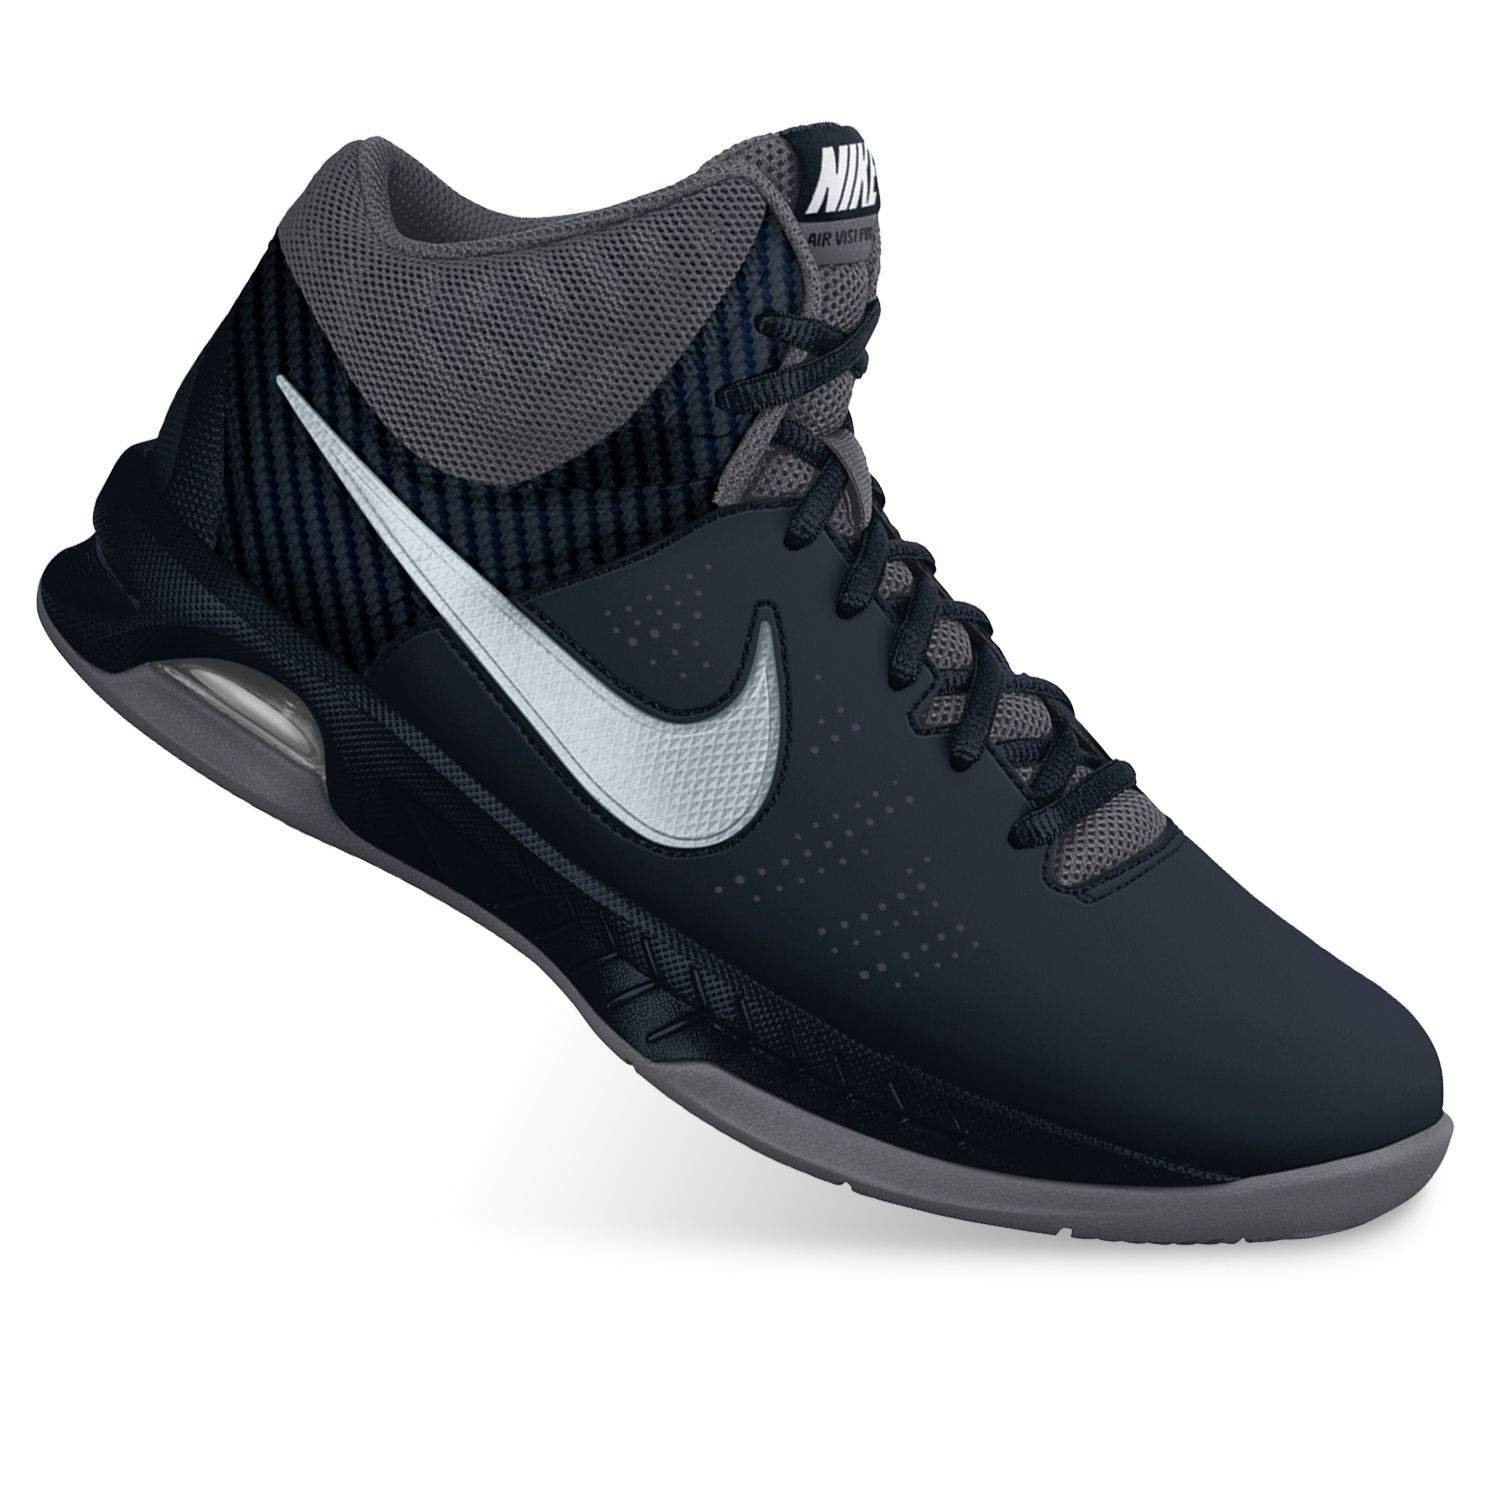 Nike Air Visi Pro VI Men's Basketball Shoes